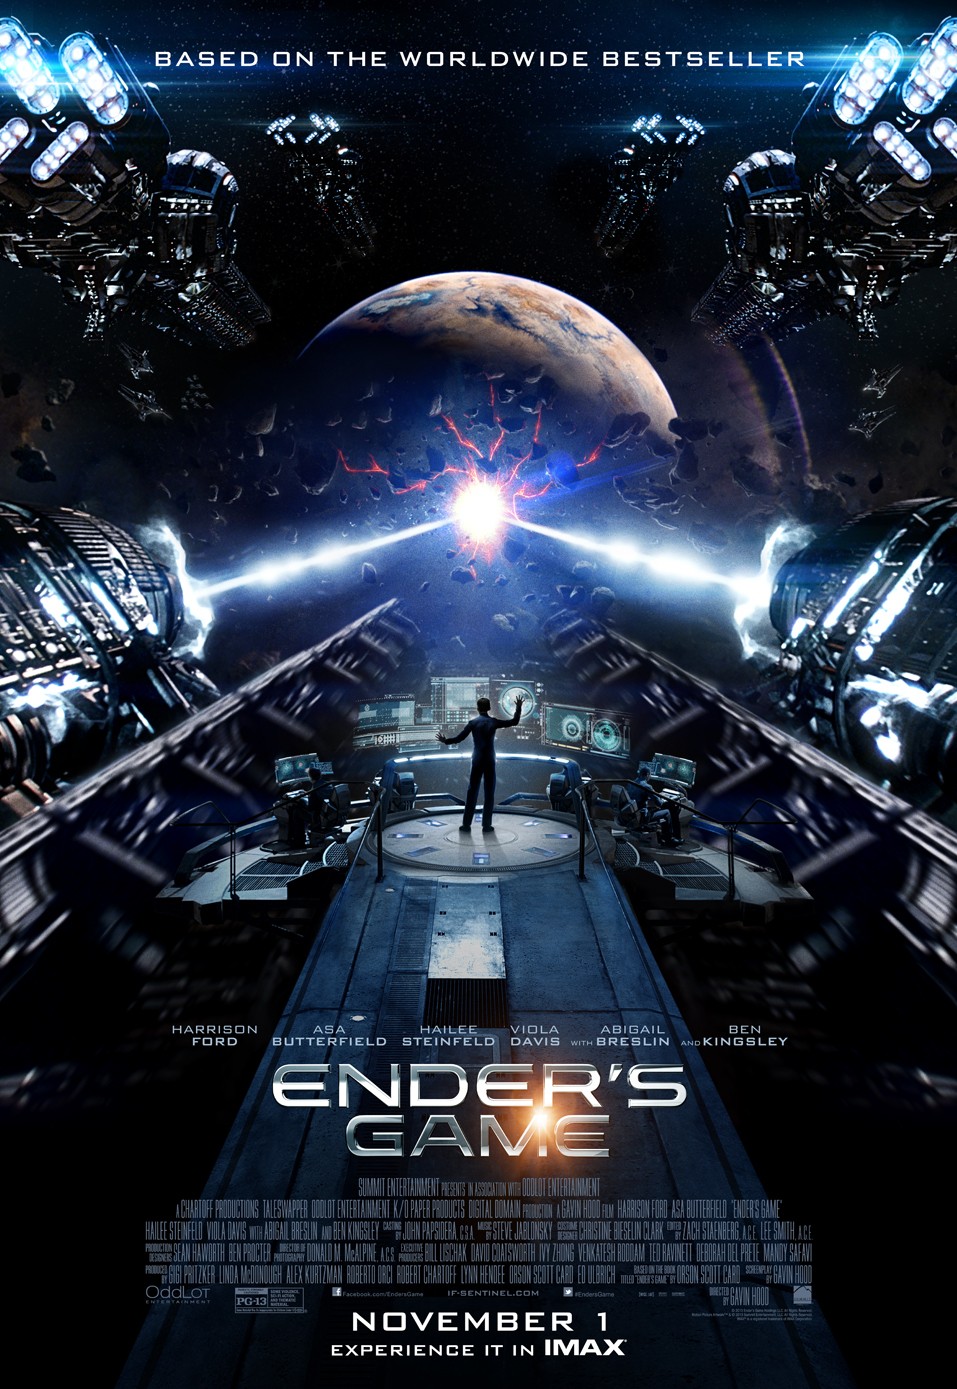 Ender's Game (film) - Wikipedia